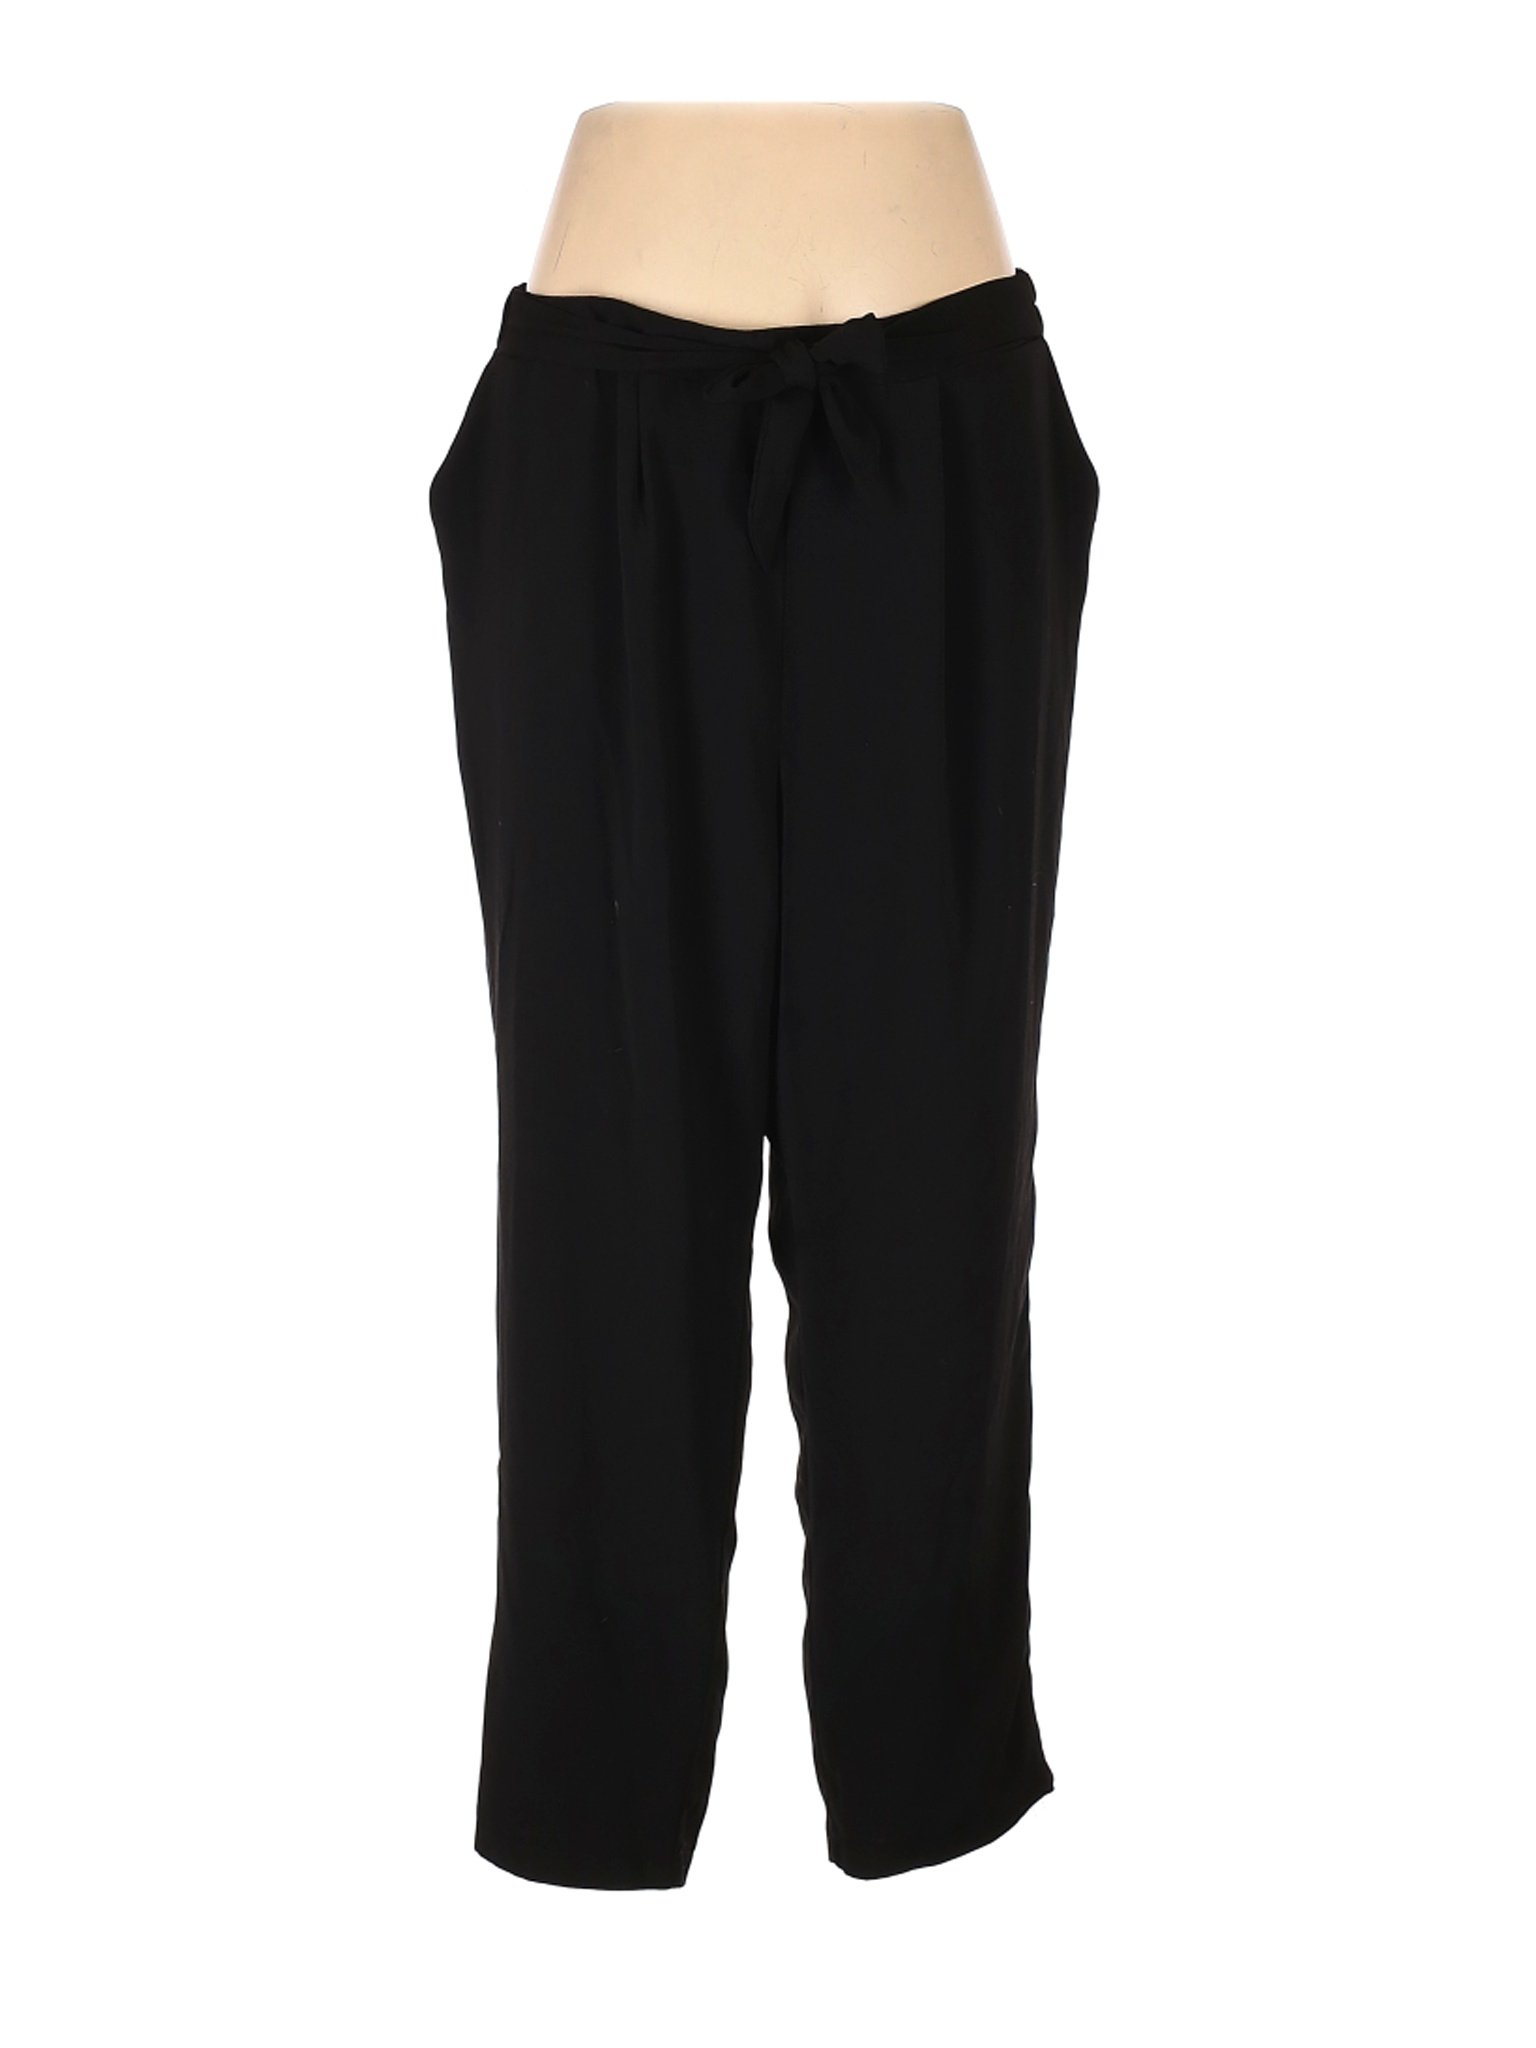 Evans Women Black Casual Pants 22 Plus | eBay